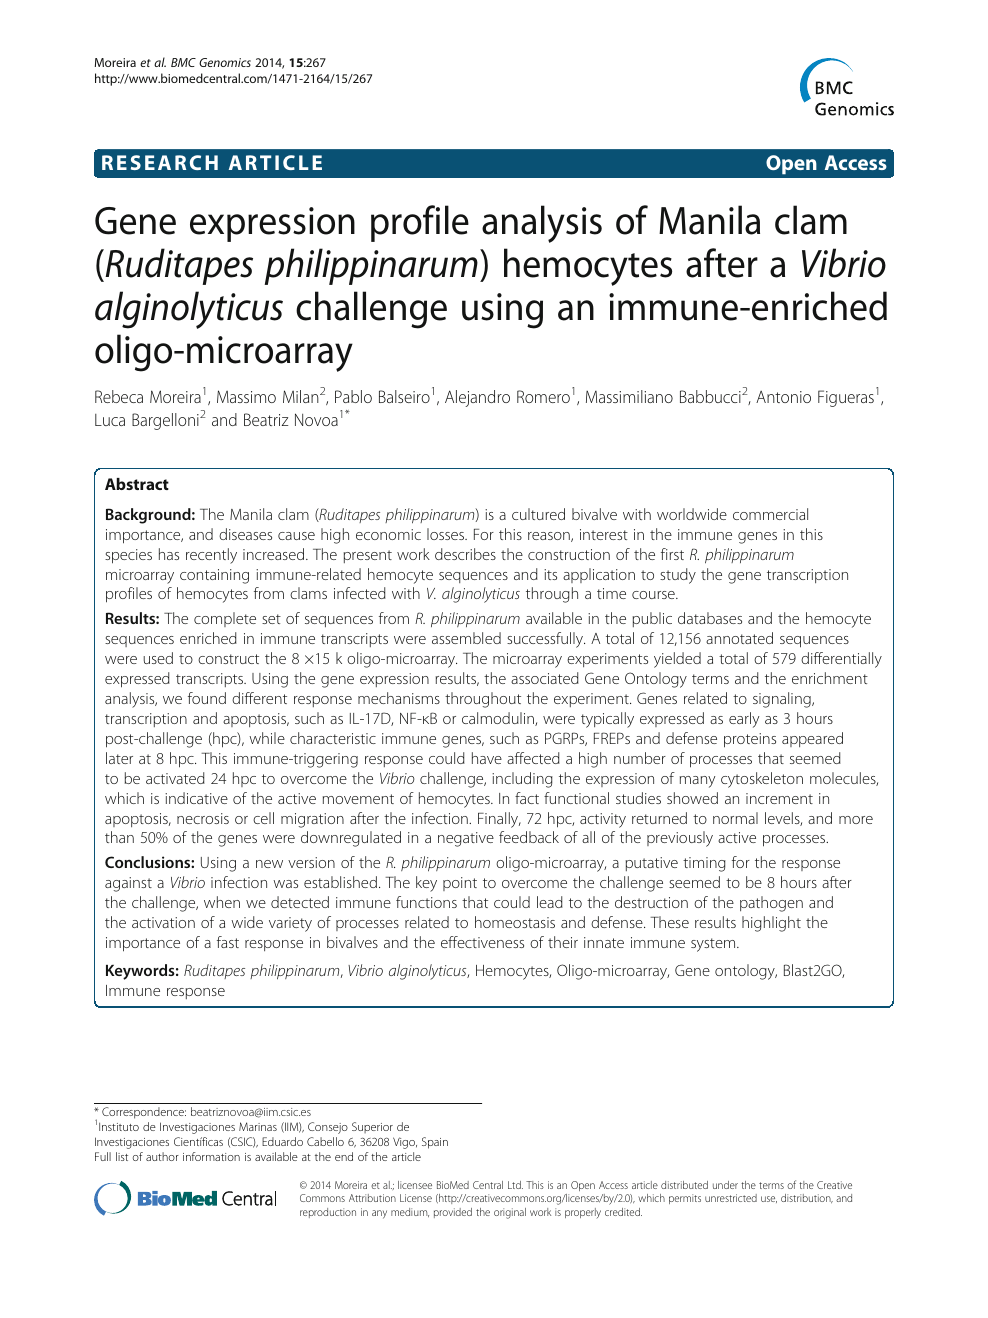 Gene expression profile analysis of Manila clam (Ruditapes 